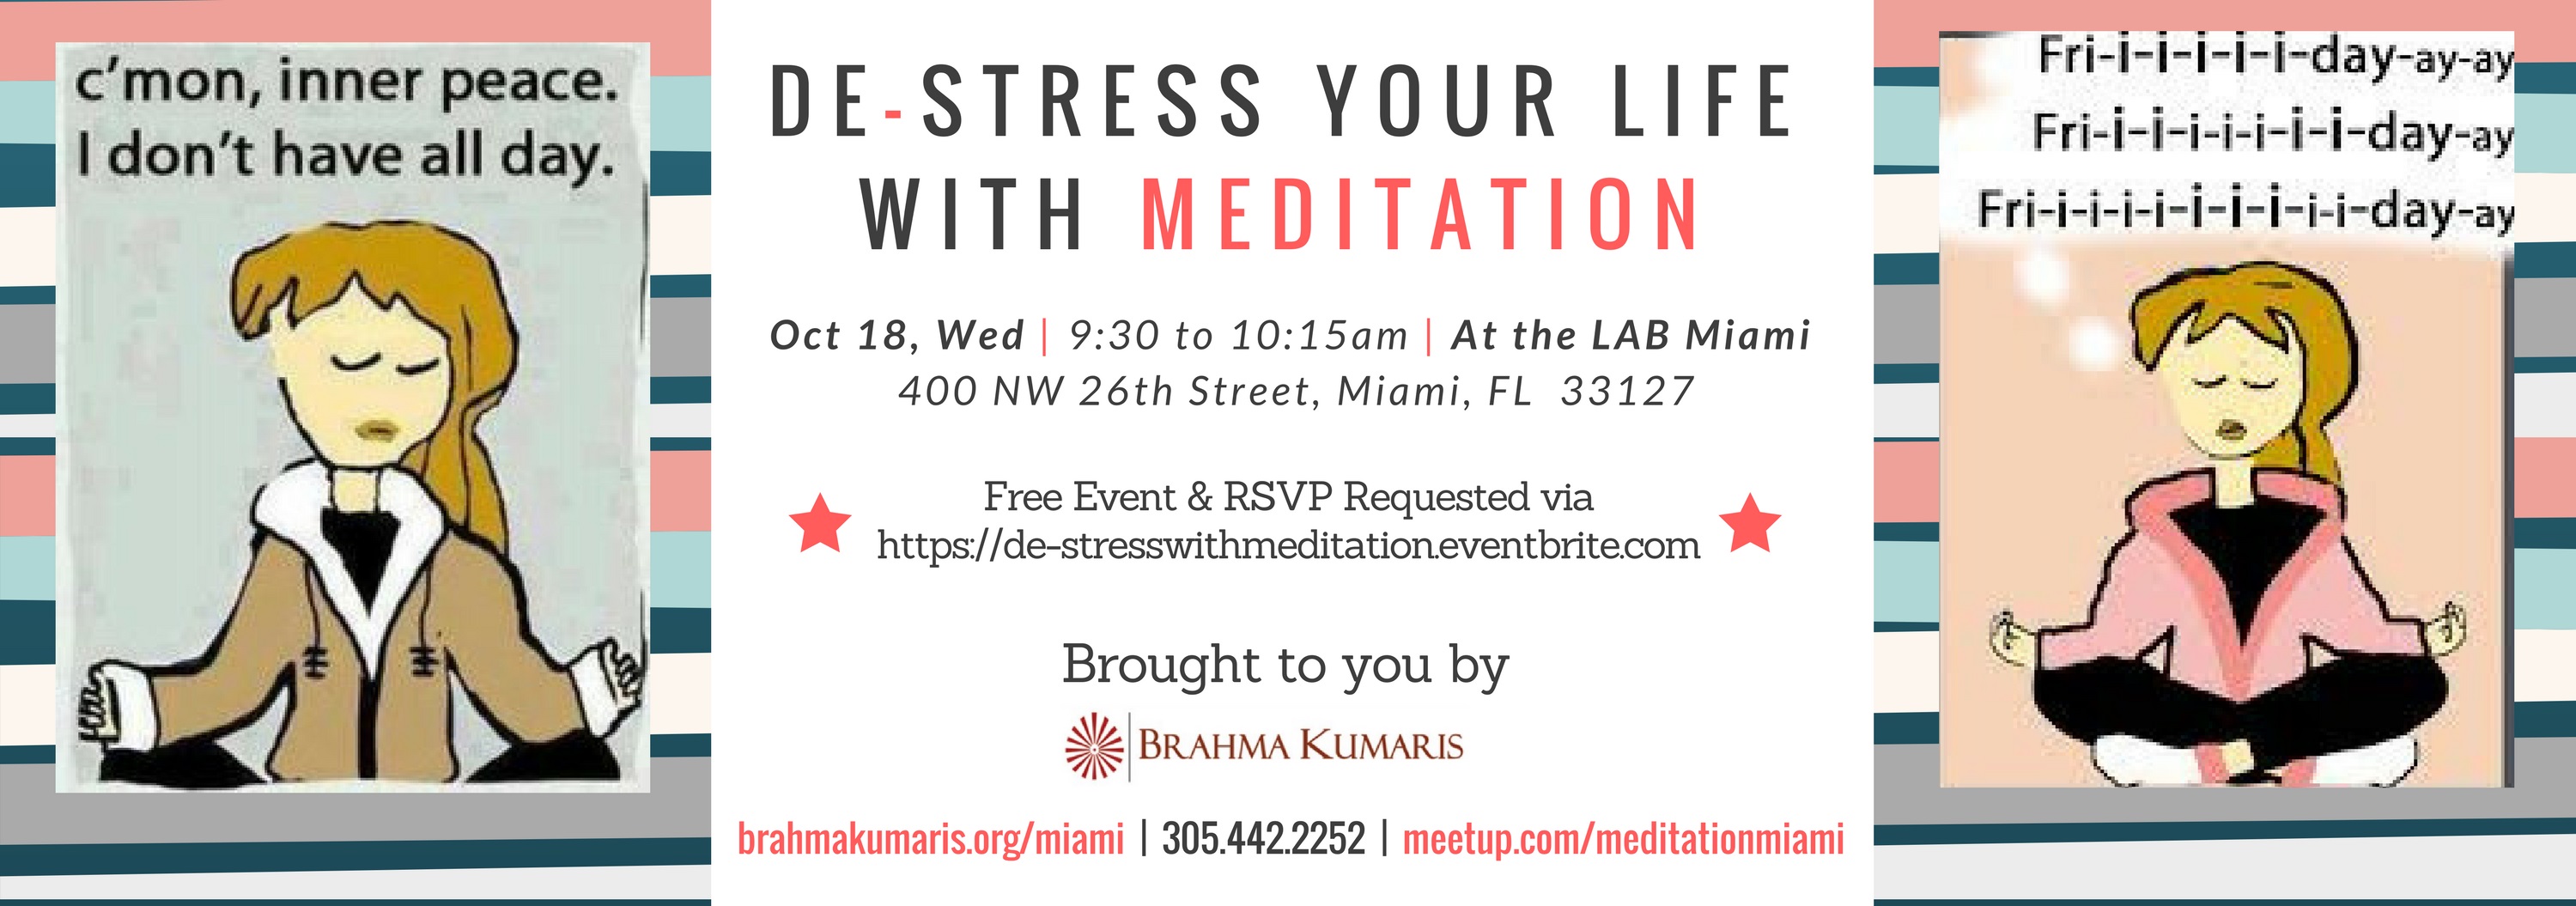 De-Stress Your Life With Meditation